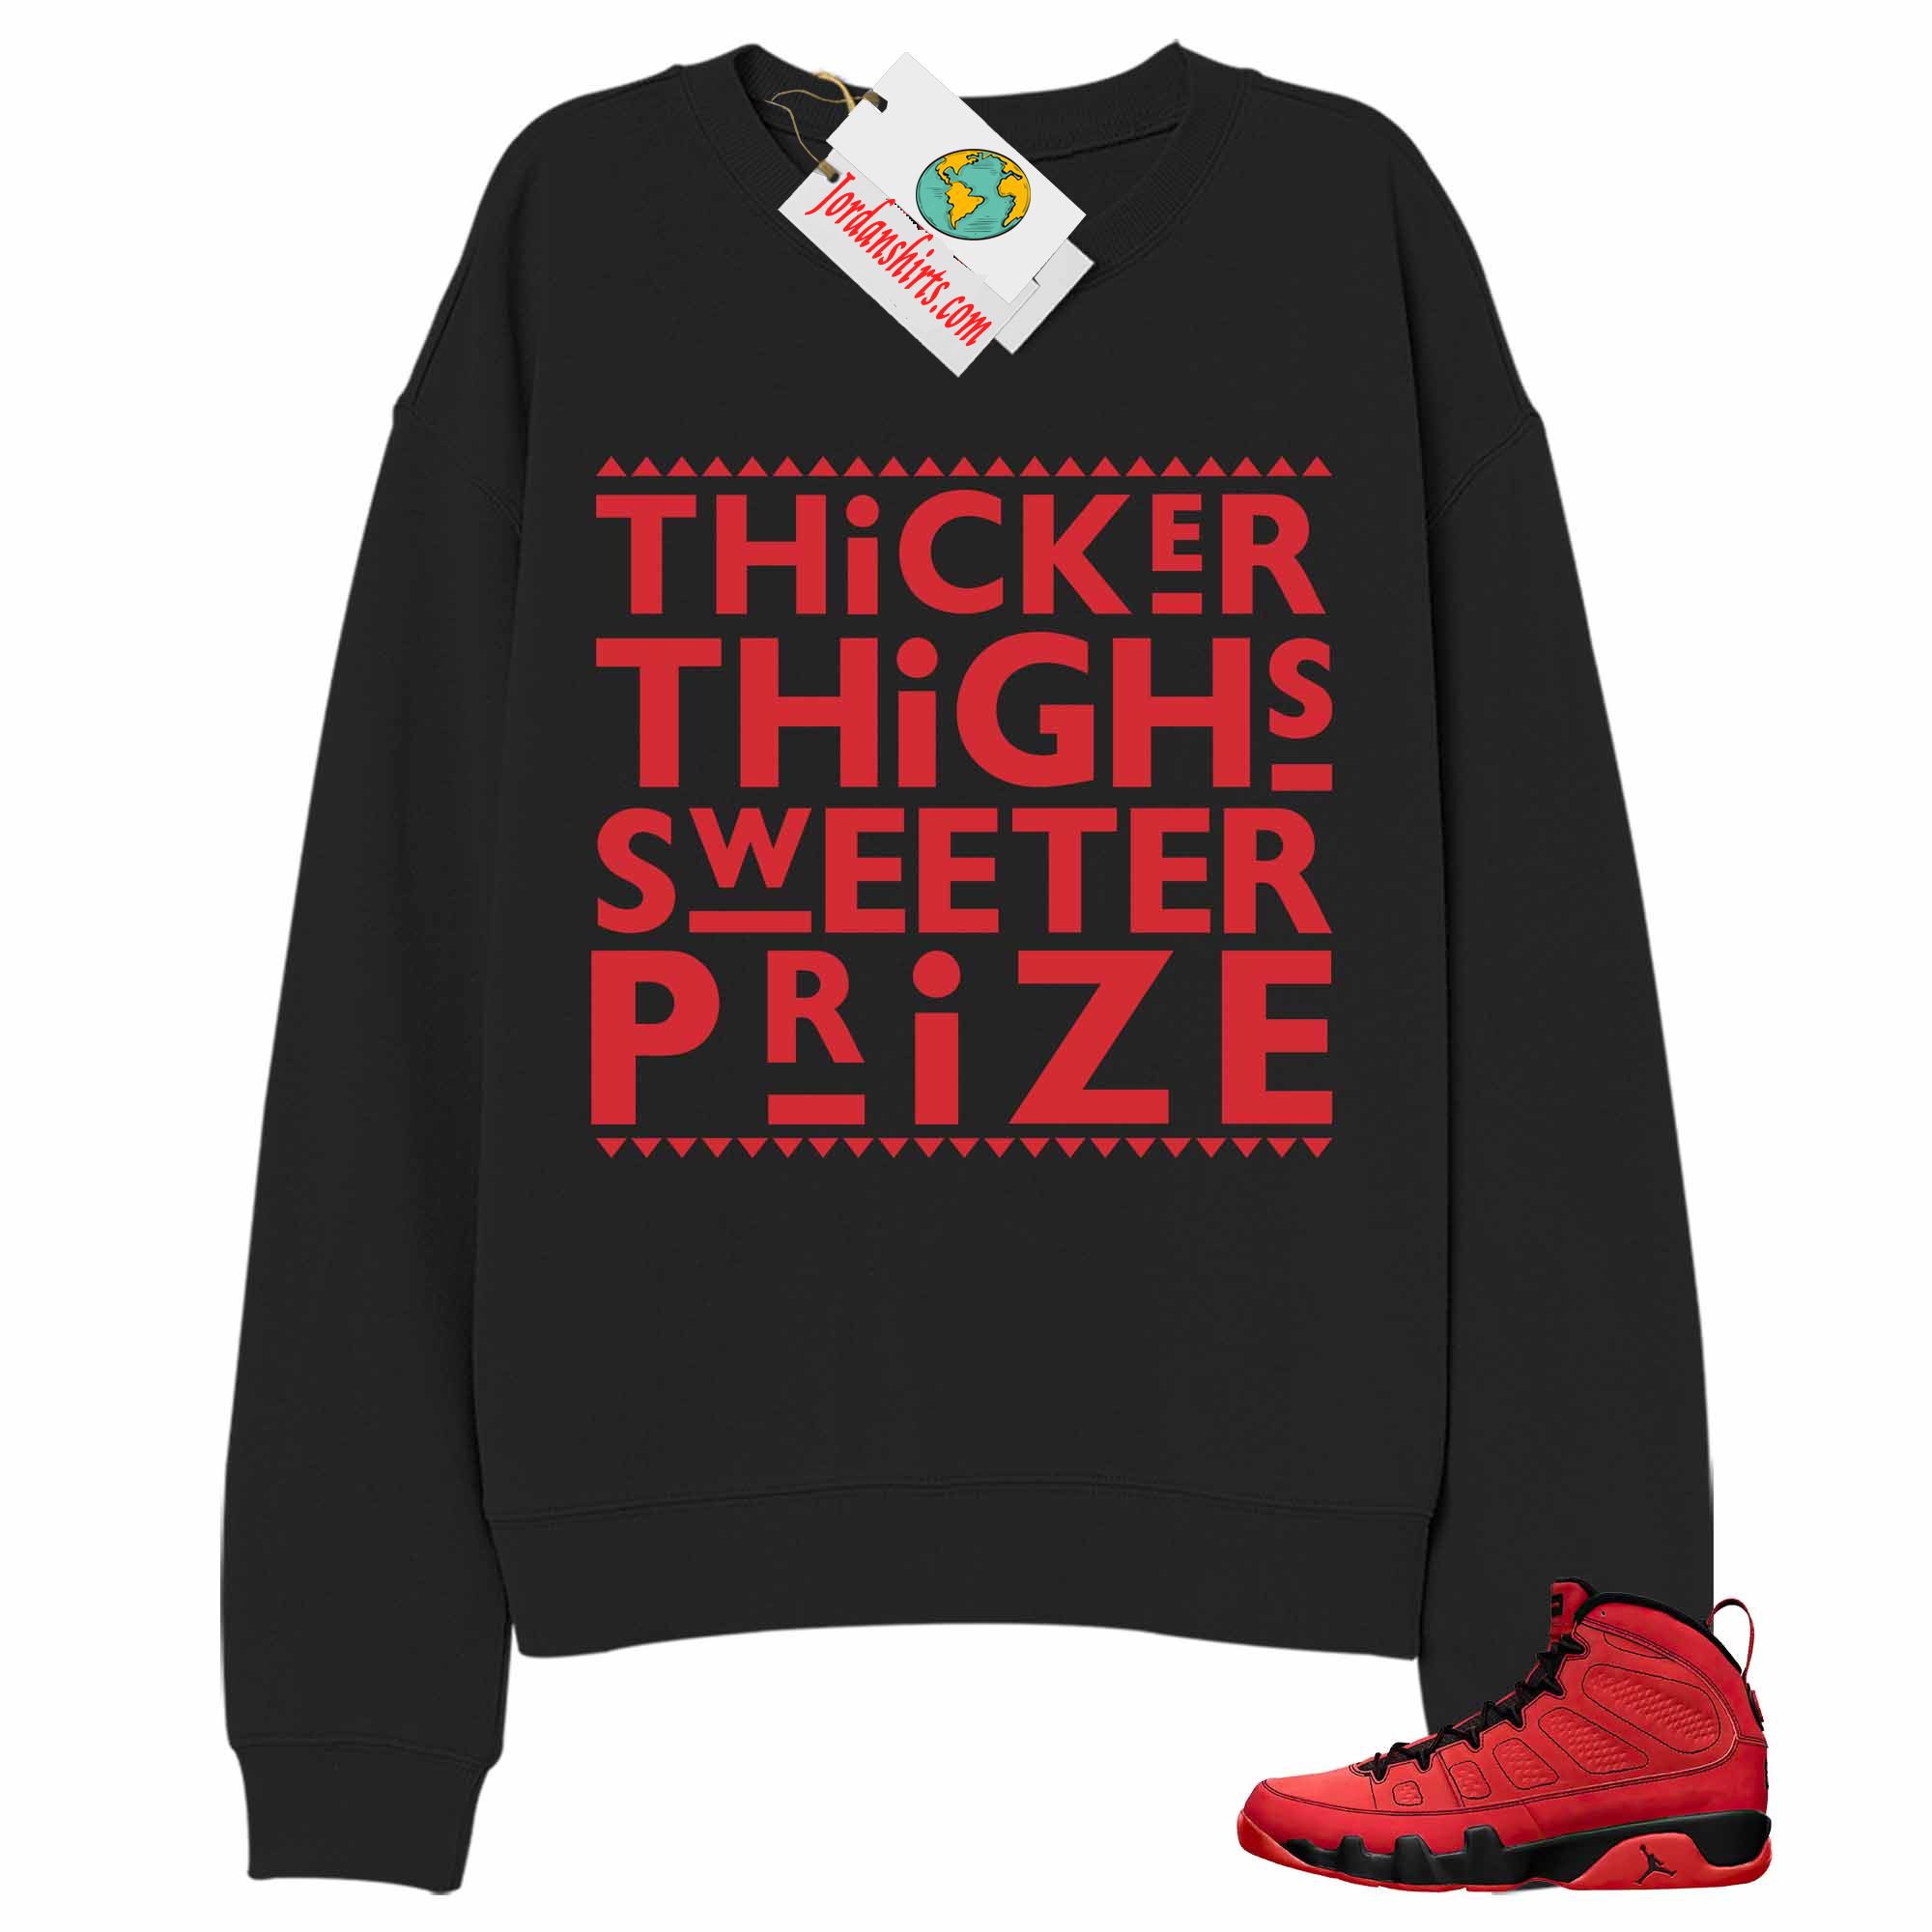 Jordan 9 Sweatshirt, Thicker Thighs Sweeter Prize Black Sweatshirt Air Jordan 9 Chile Red 9s Full Size Up To 5xl